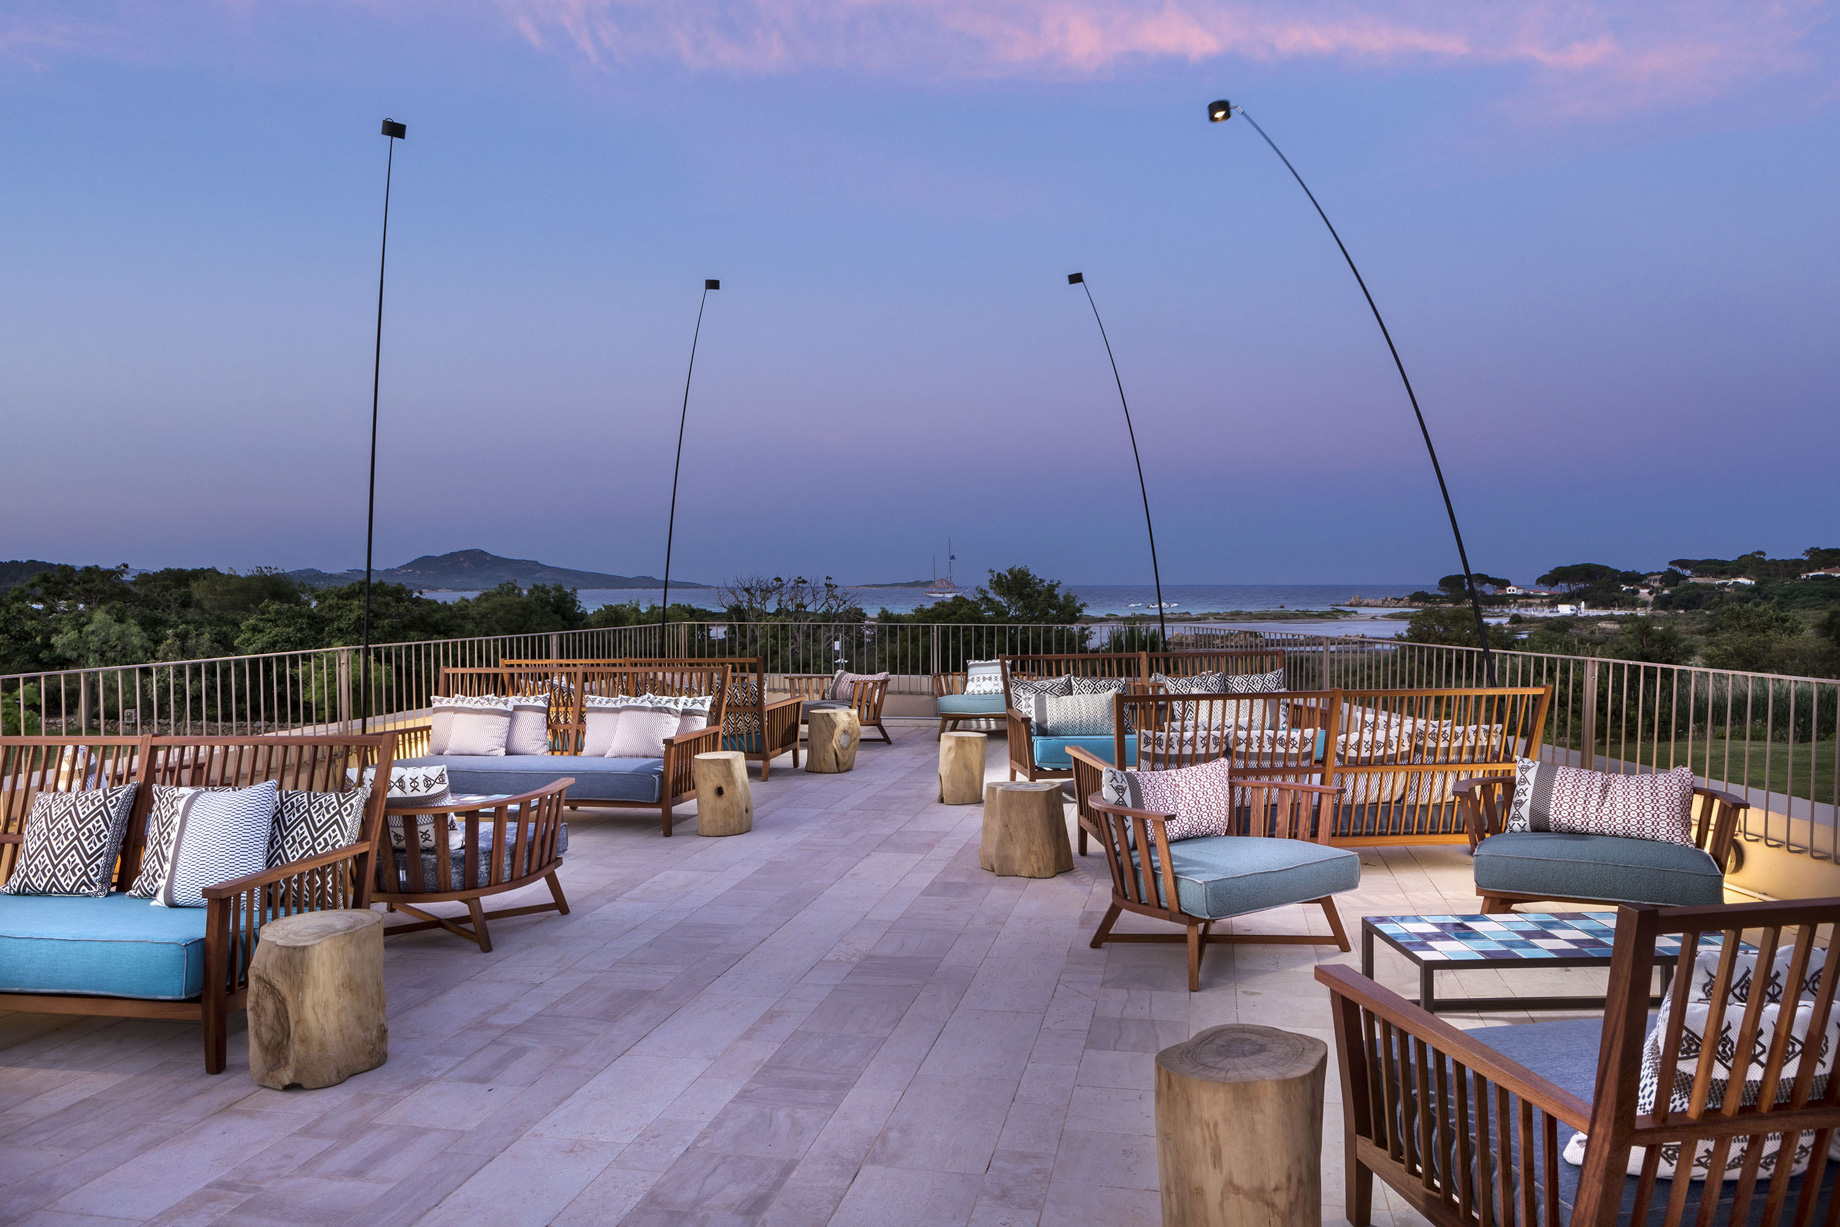 Baglioni Resort Sardinia – San Teodoro, Sardegna, Italy – Sunsert Terrace Bar Dusk View